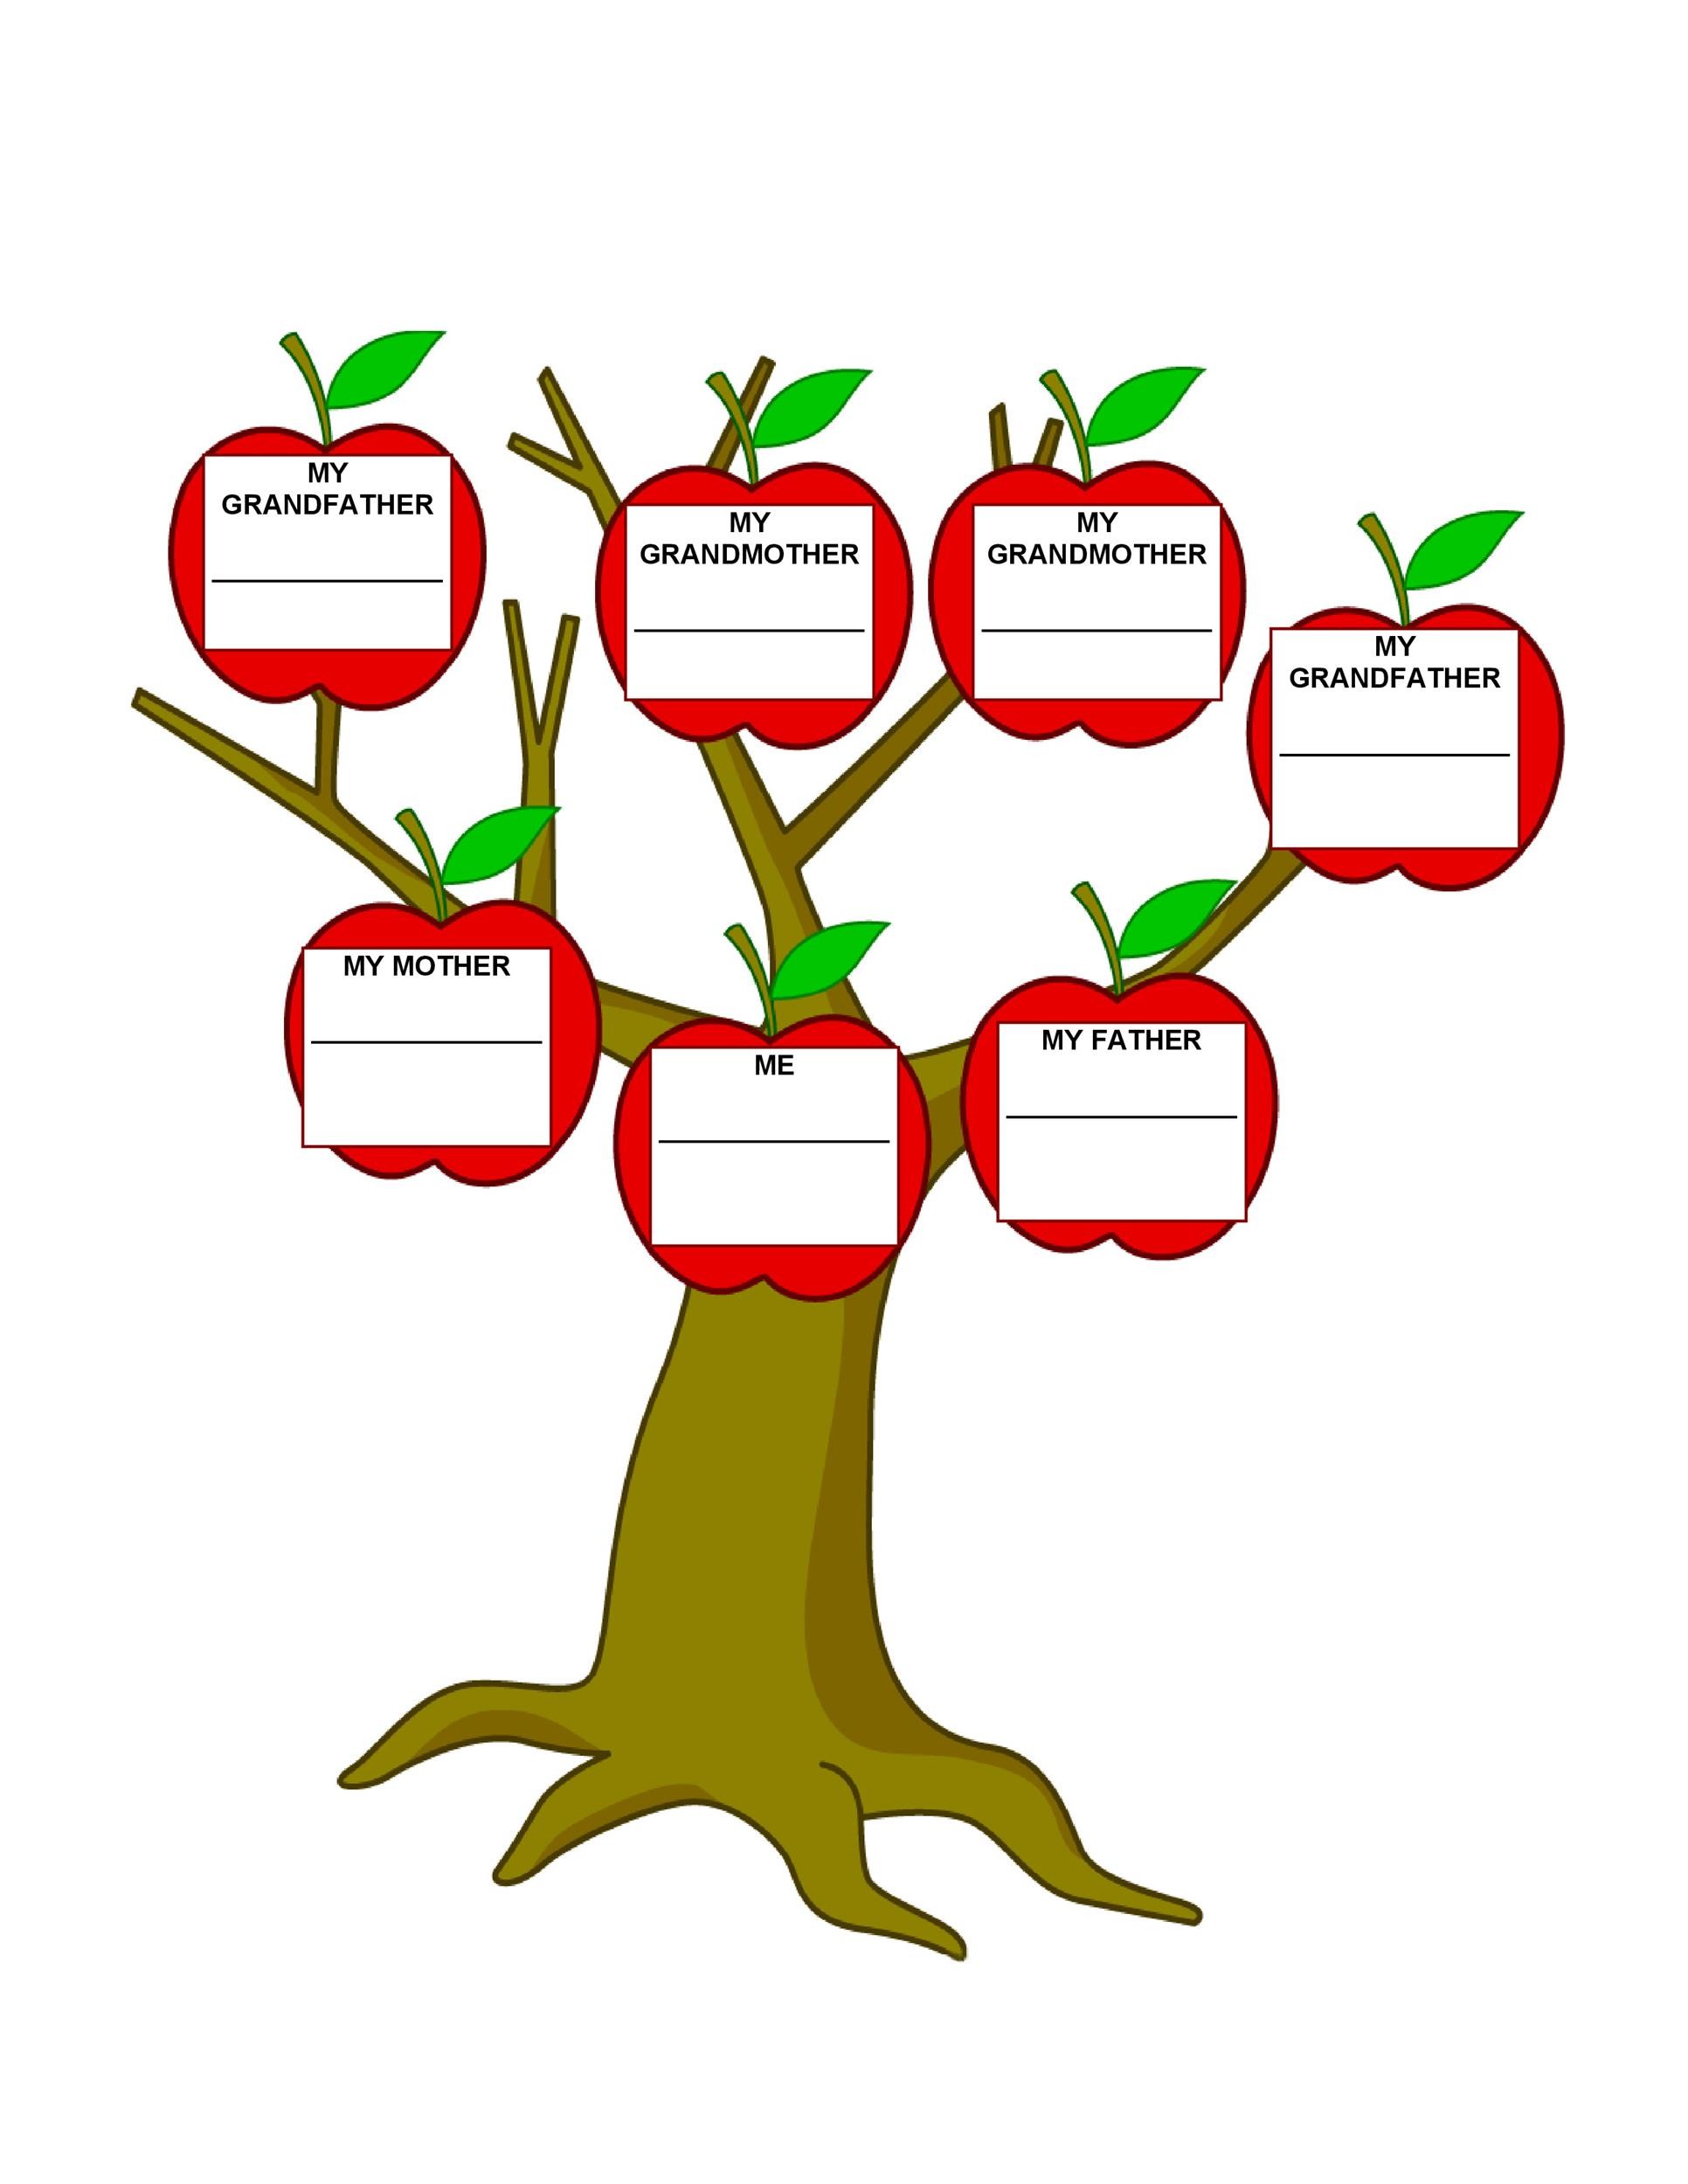 41+ Free Family Tree Templates (Word, Excel, PDF) ᐅ TemplateLab